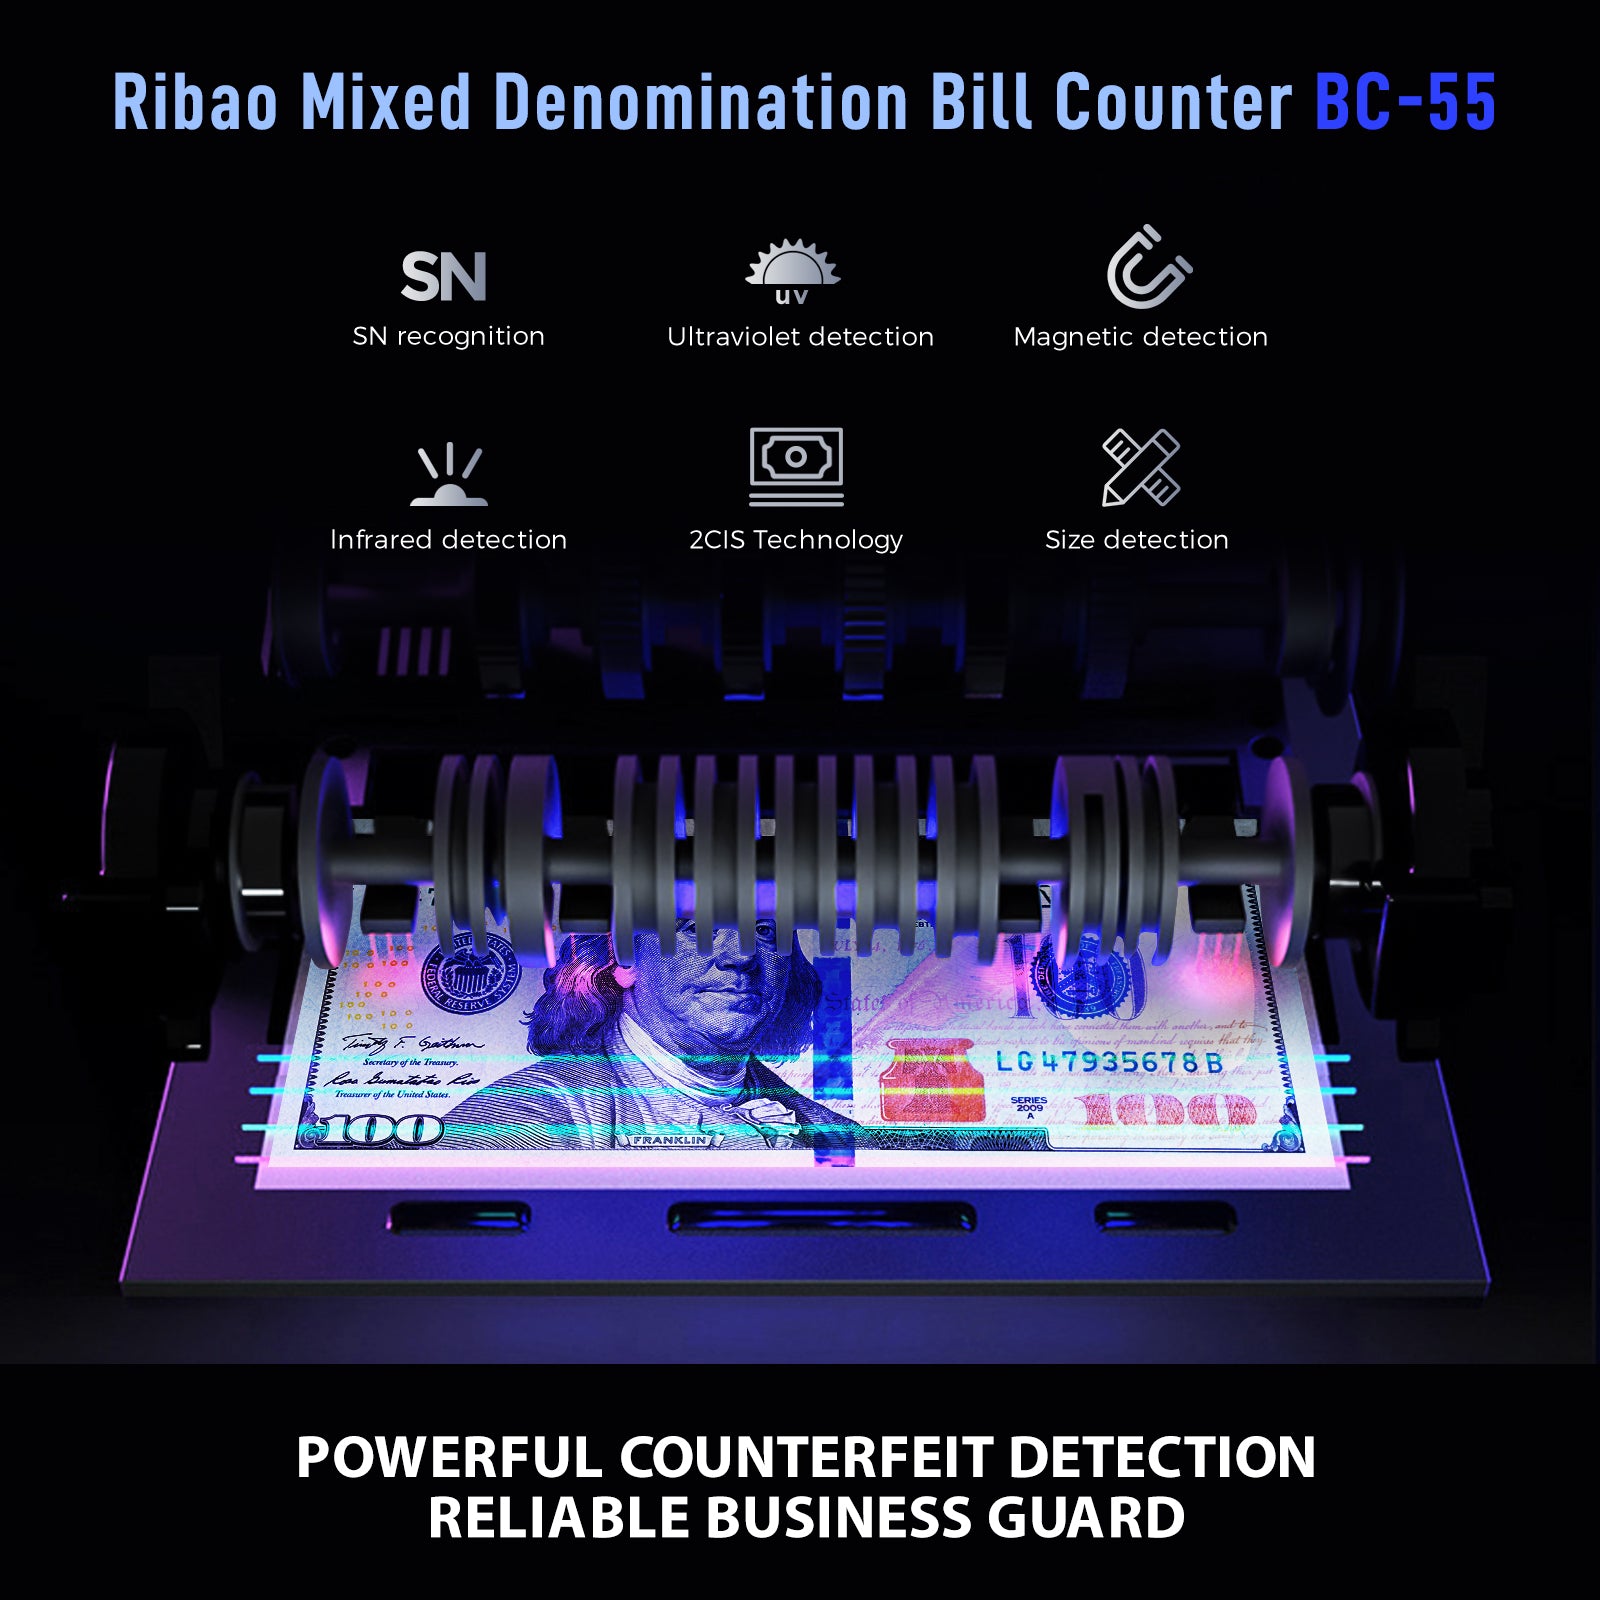 Ribao mixed denomanation bill counter with counterfeit detection